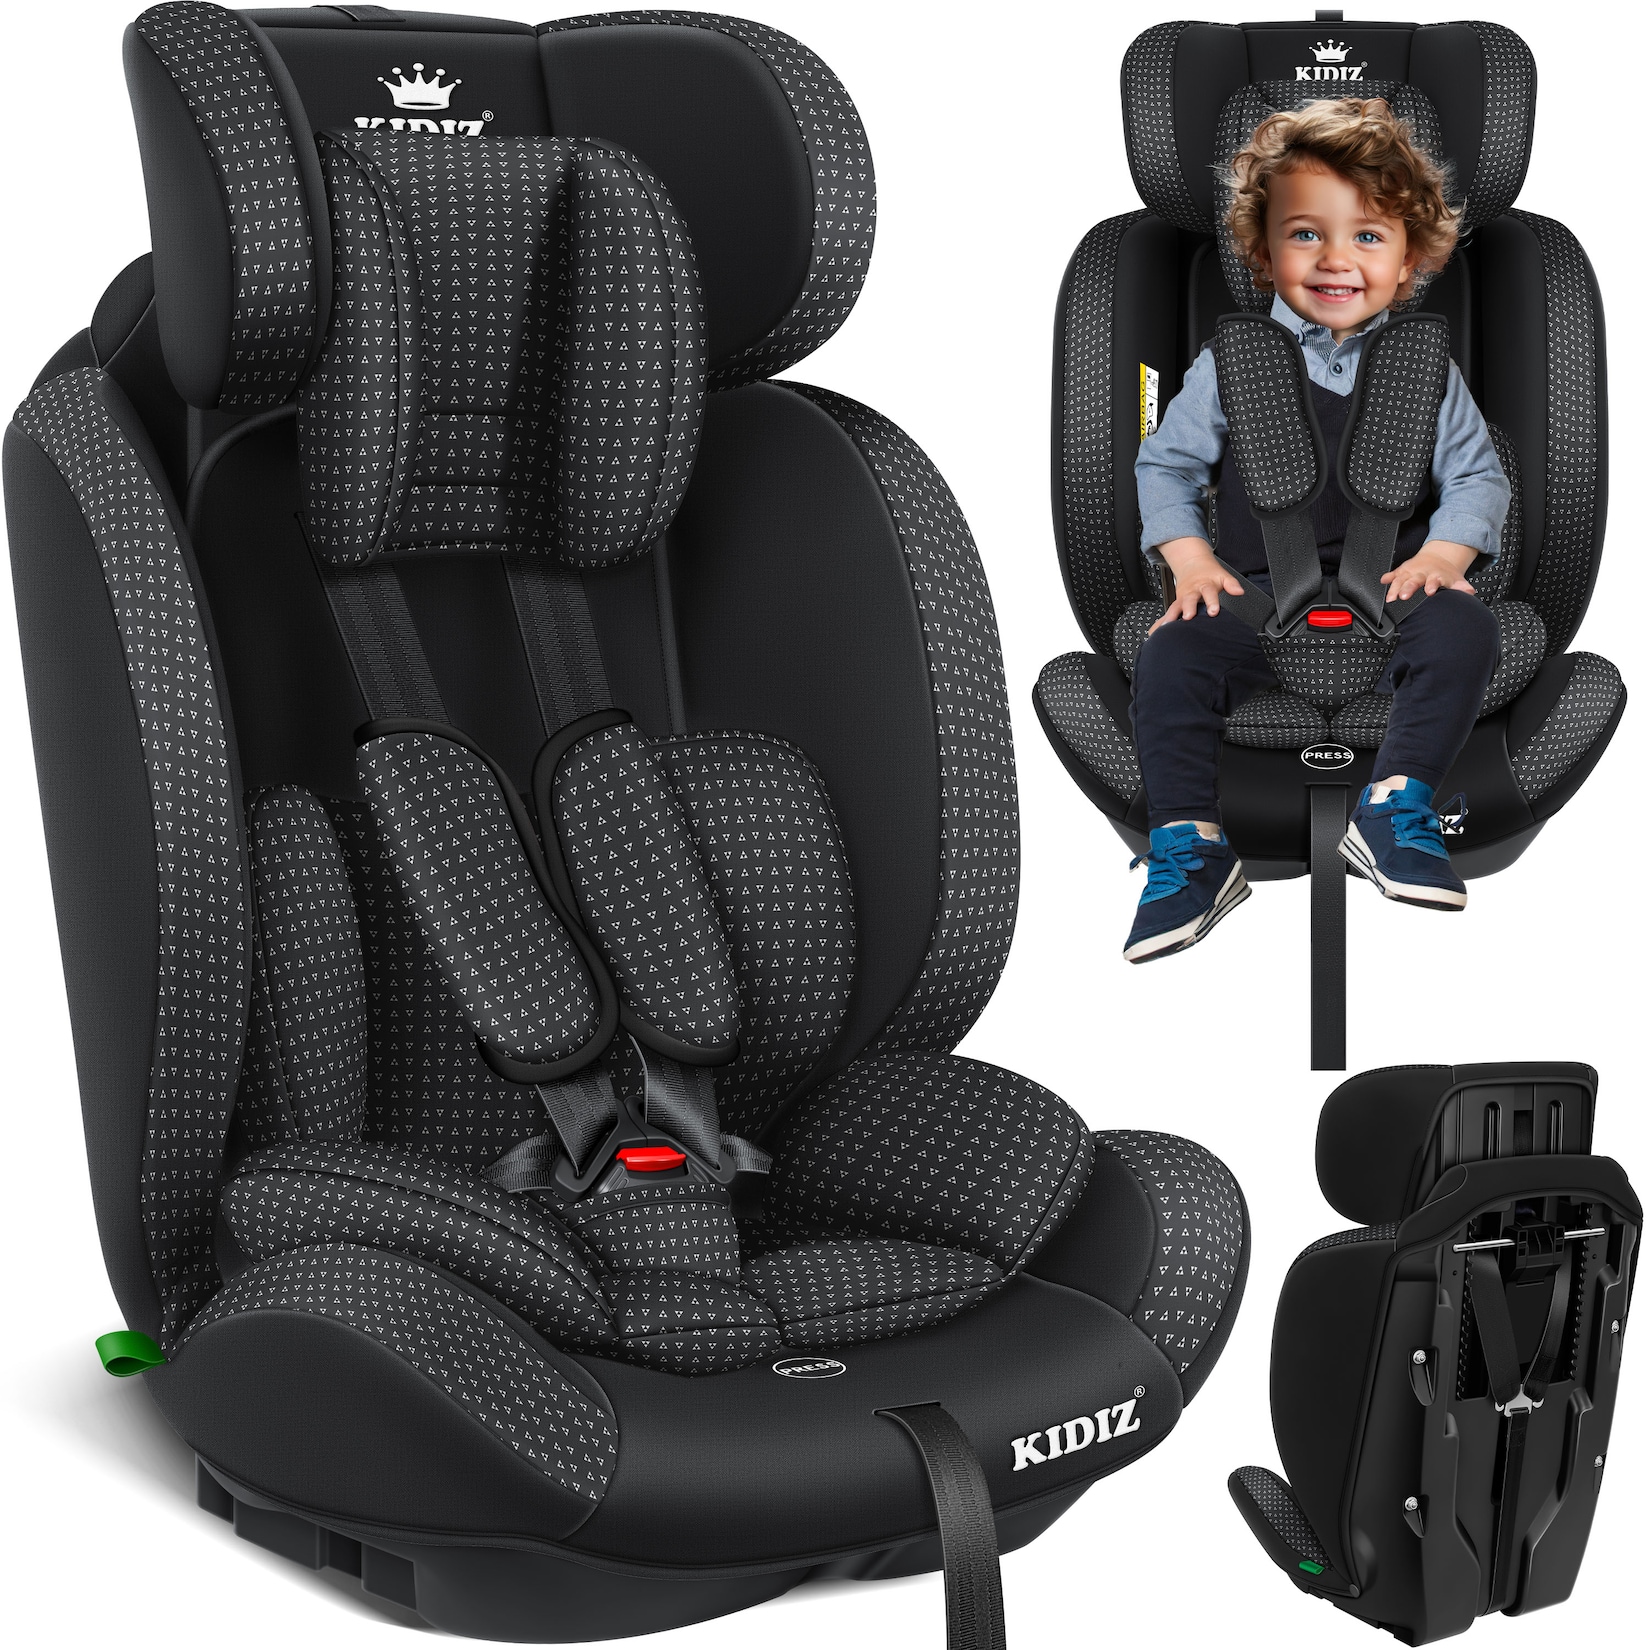 KIDIZ® Autokindersitz Kindersitz Kinderautositz   Autositz Sitzschale   9 kg - 36 kg 1-12 Jahre   Gruppe 1/2/3   univers